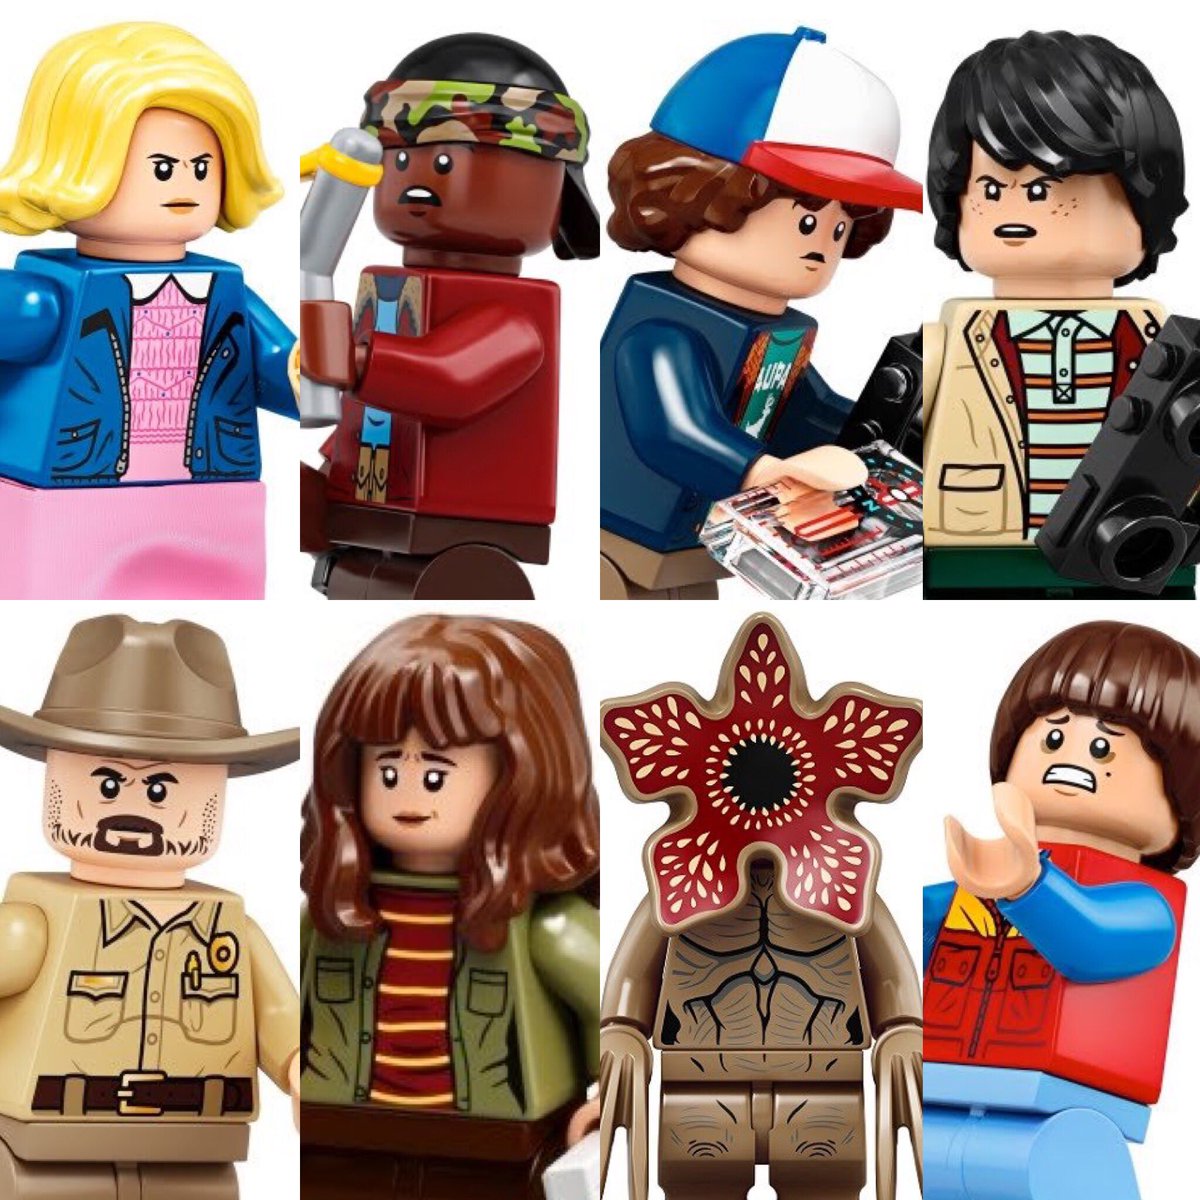 Stranger Pics of the  @Stranger_Things players from LEGO @FinnSkata @milliebbrown @GatenM123 @noah_schnapp @calebmclaughlin @DavidKHarbour #StrangerThings @netflix @NetflixUK @NetflixFilm #netflix #winonaryder